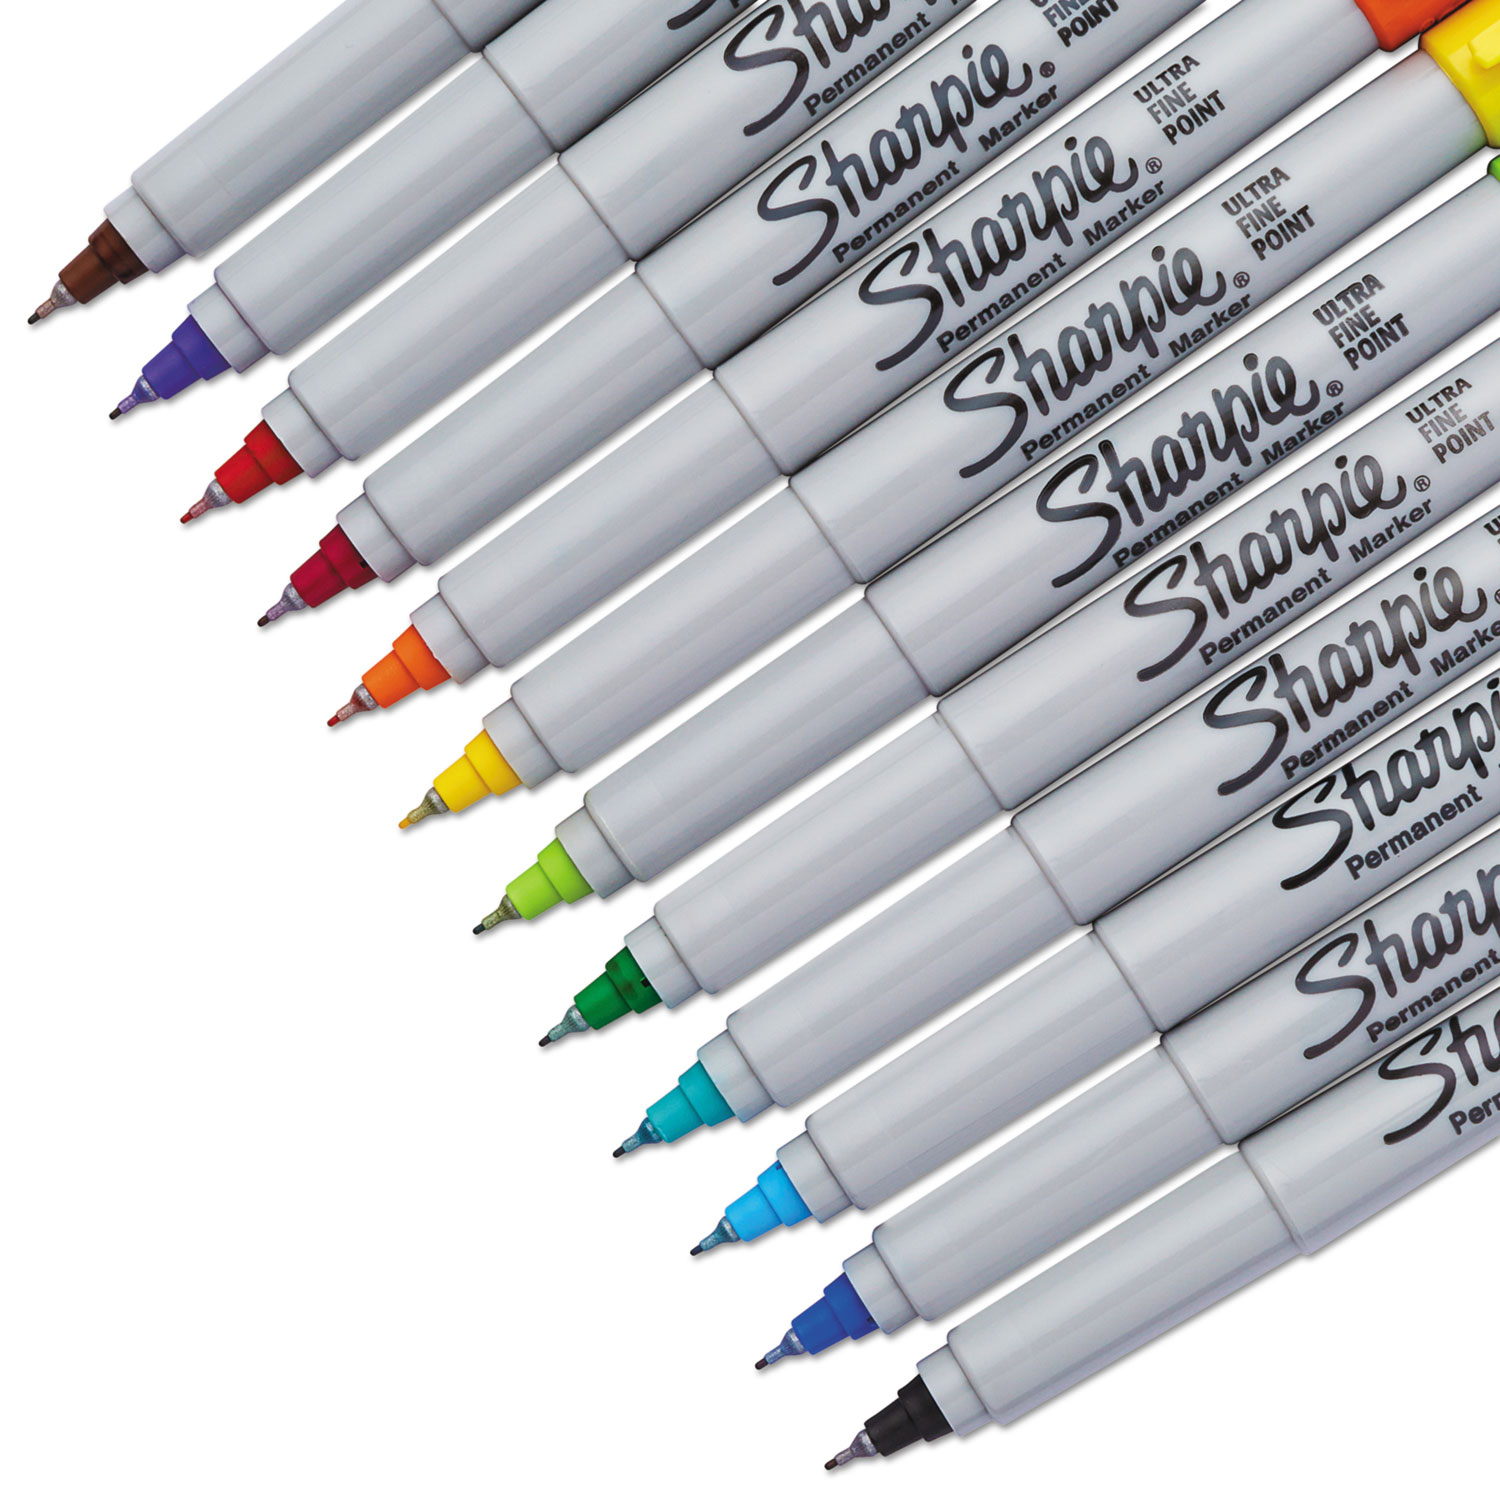 Sharpie Ultra Fine Tip Permanent Marker - SAN37001 